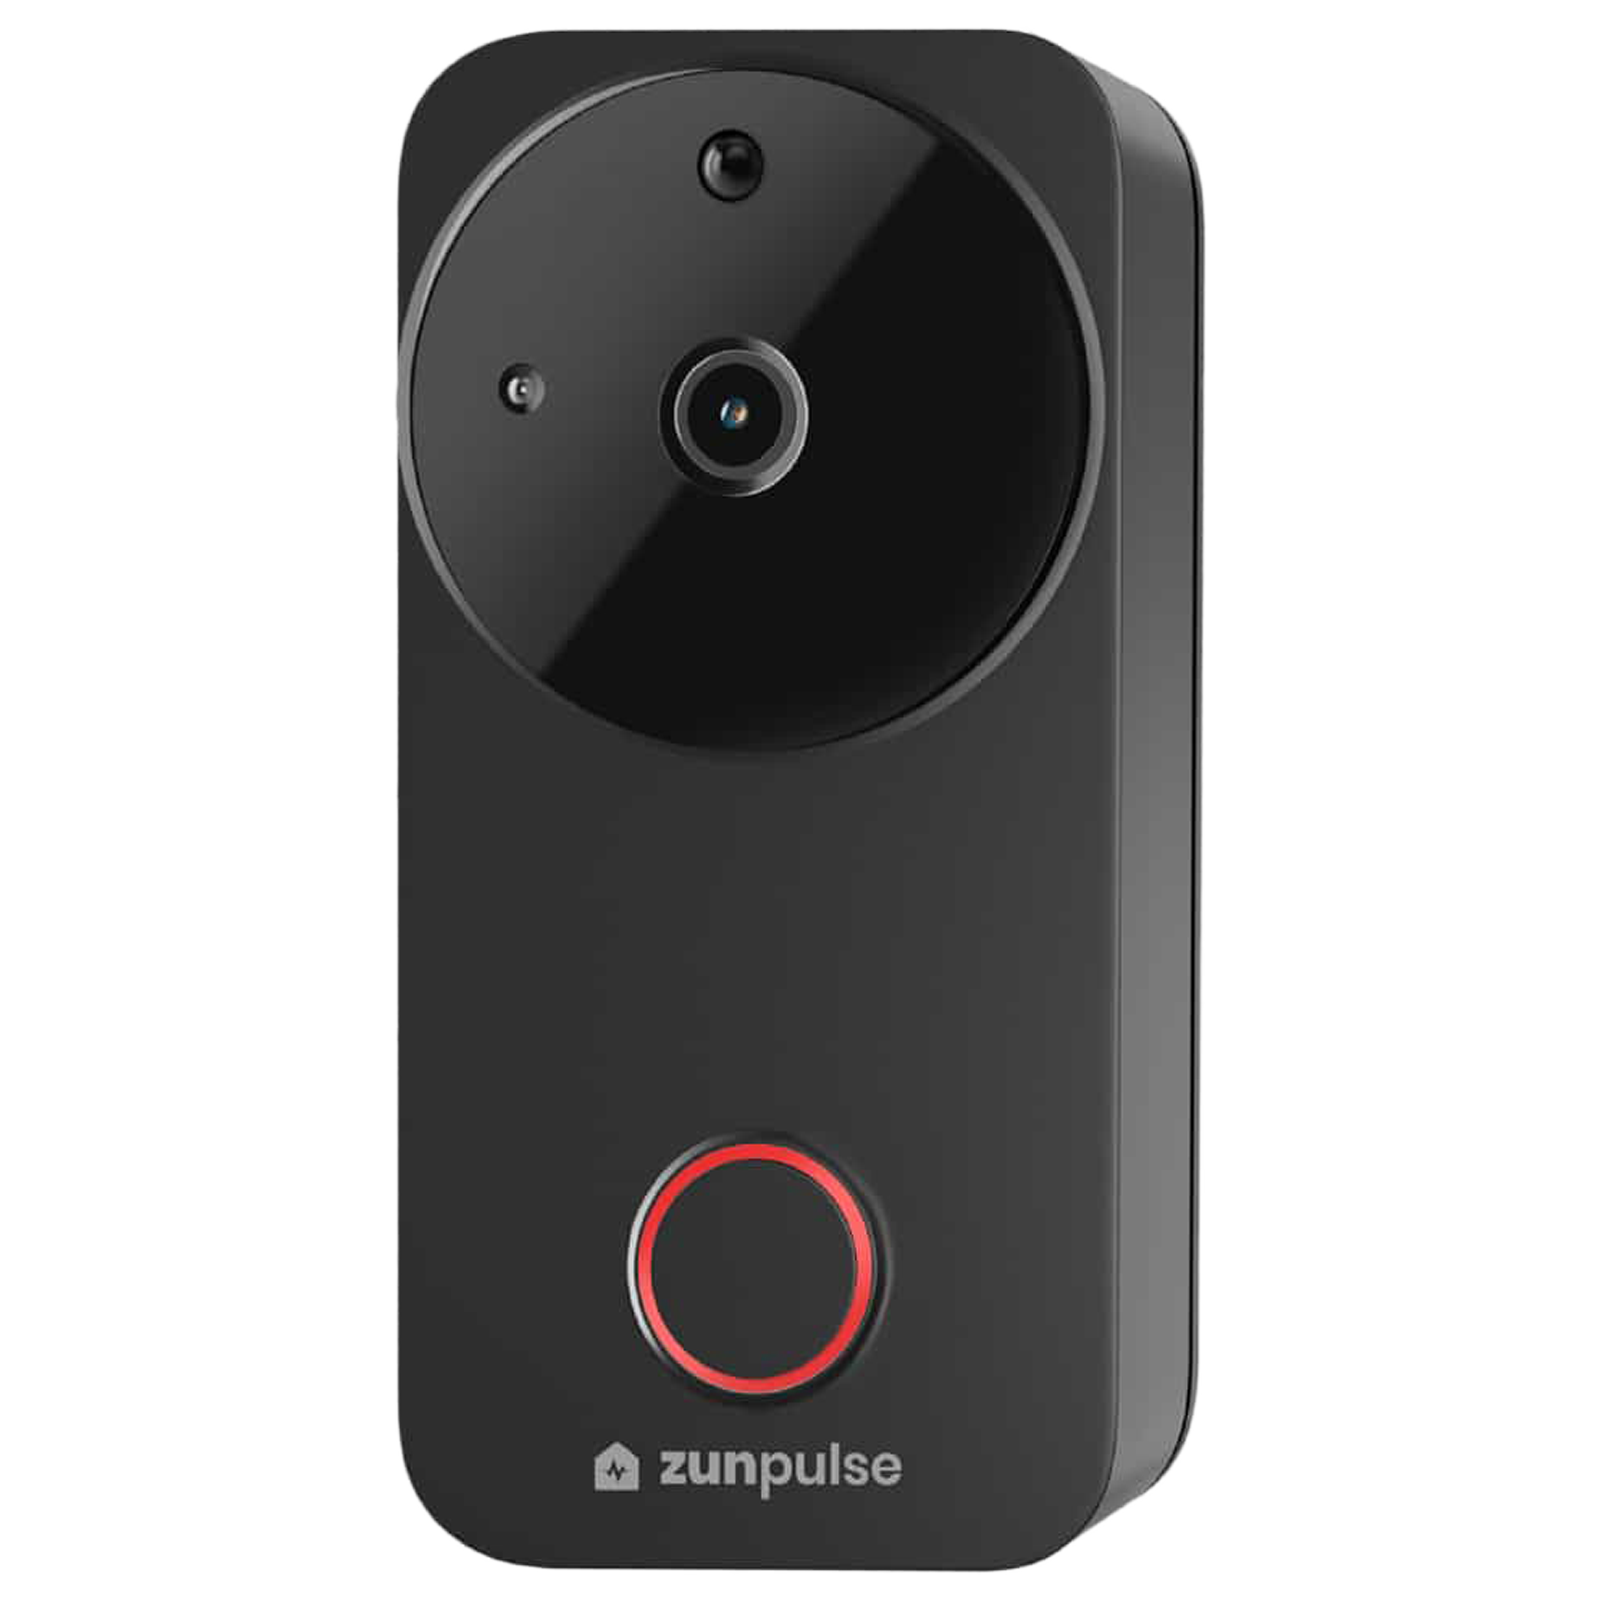 zunpulse Smart Door Bell (Motion Sensor Alert, ZUNSDB, Black)